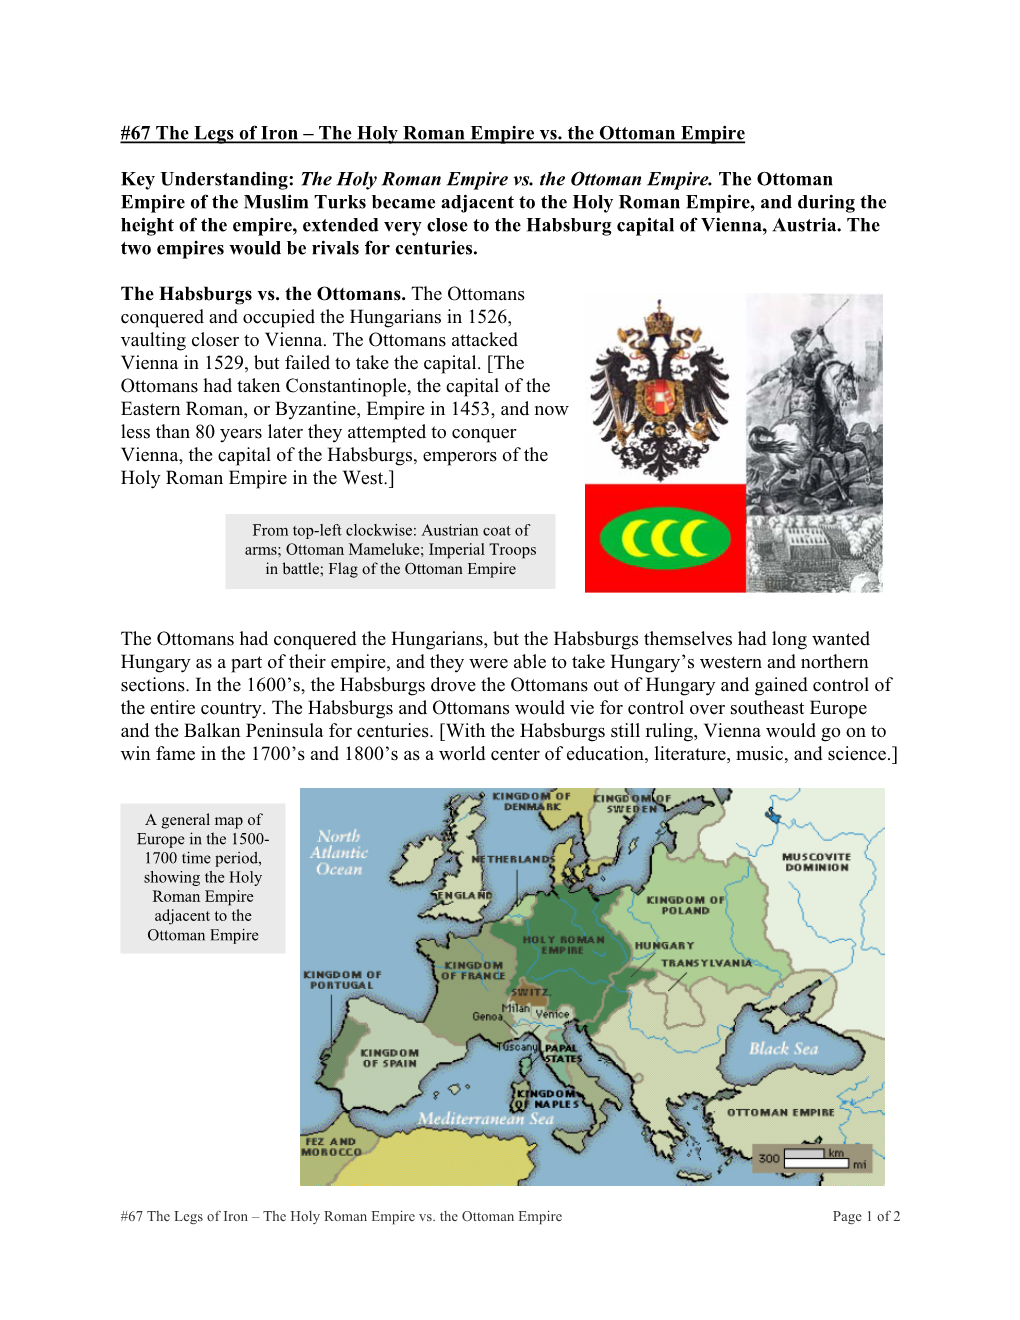 The Holy Roman Empire Vs. the Ottoman Empire